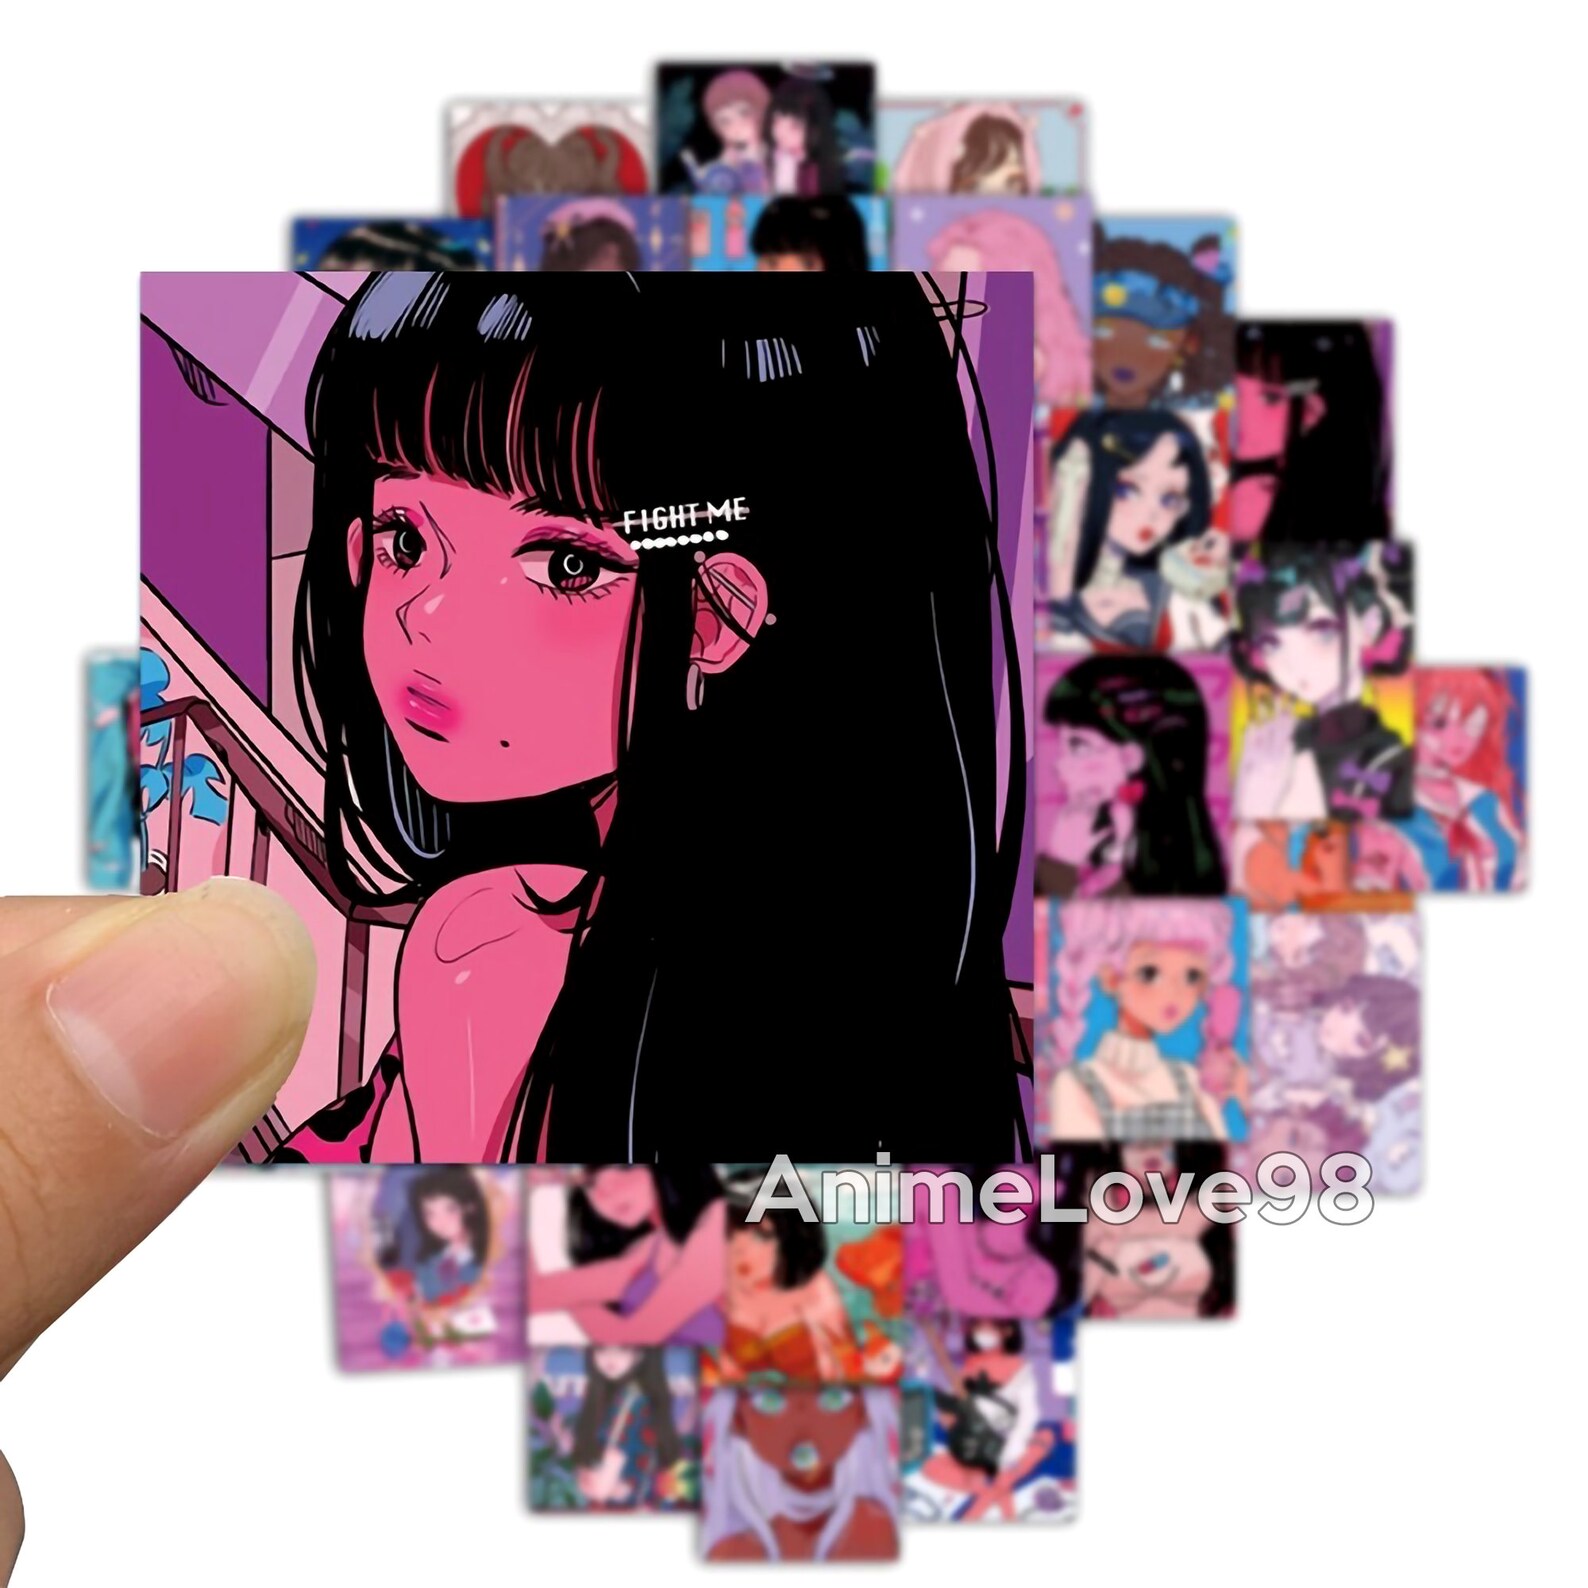 Pcs Aesthetic Girl Stickers Pack Waterproof Anime Manga Etsy